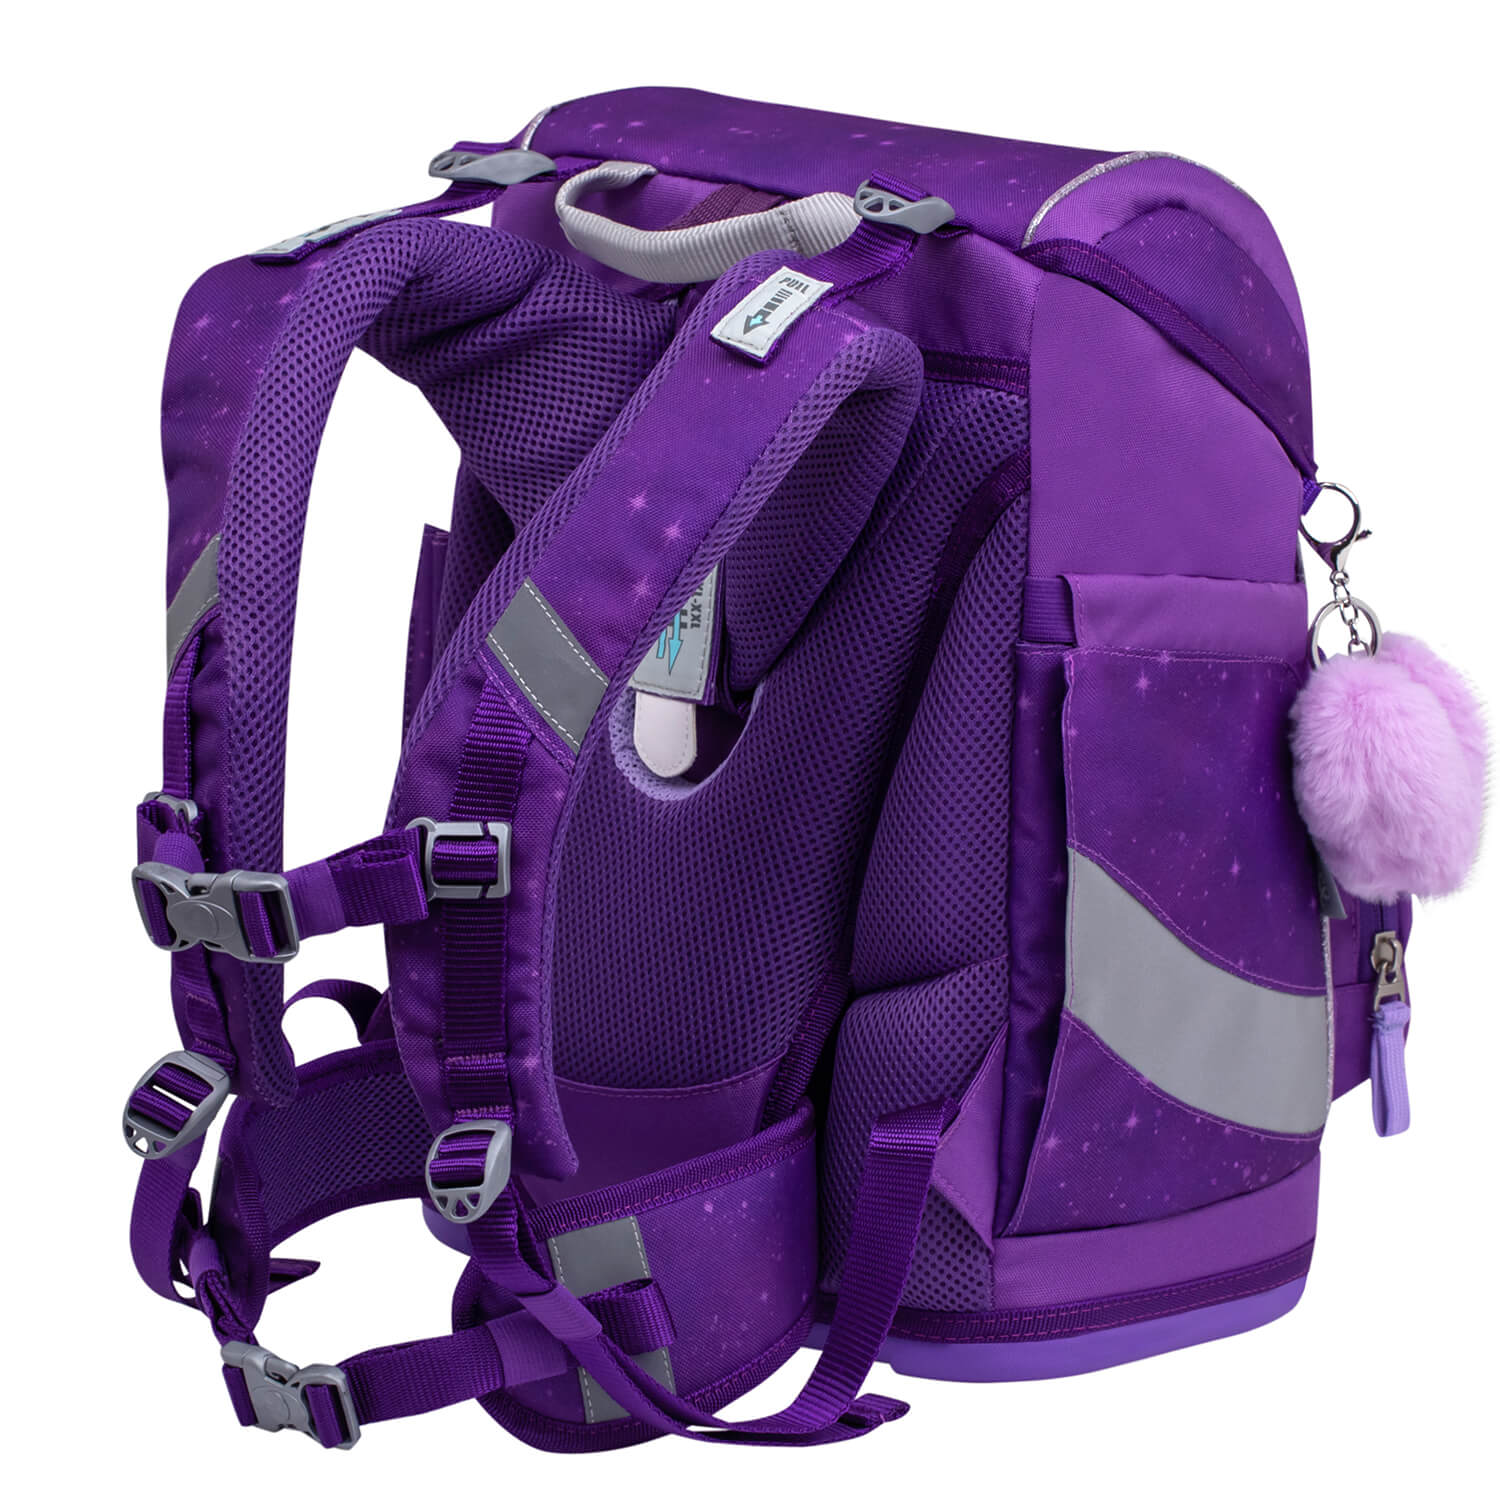 Smarty Purple Sky schoolbag set 5 pcs